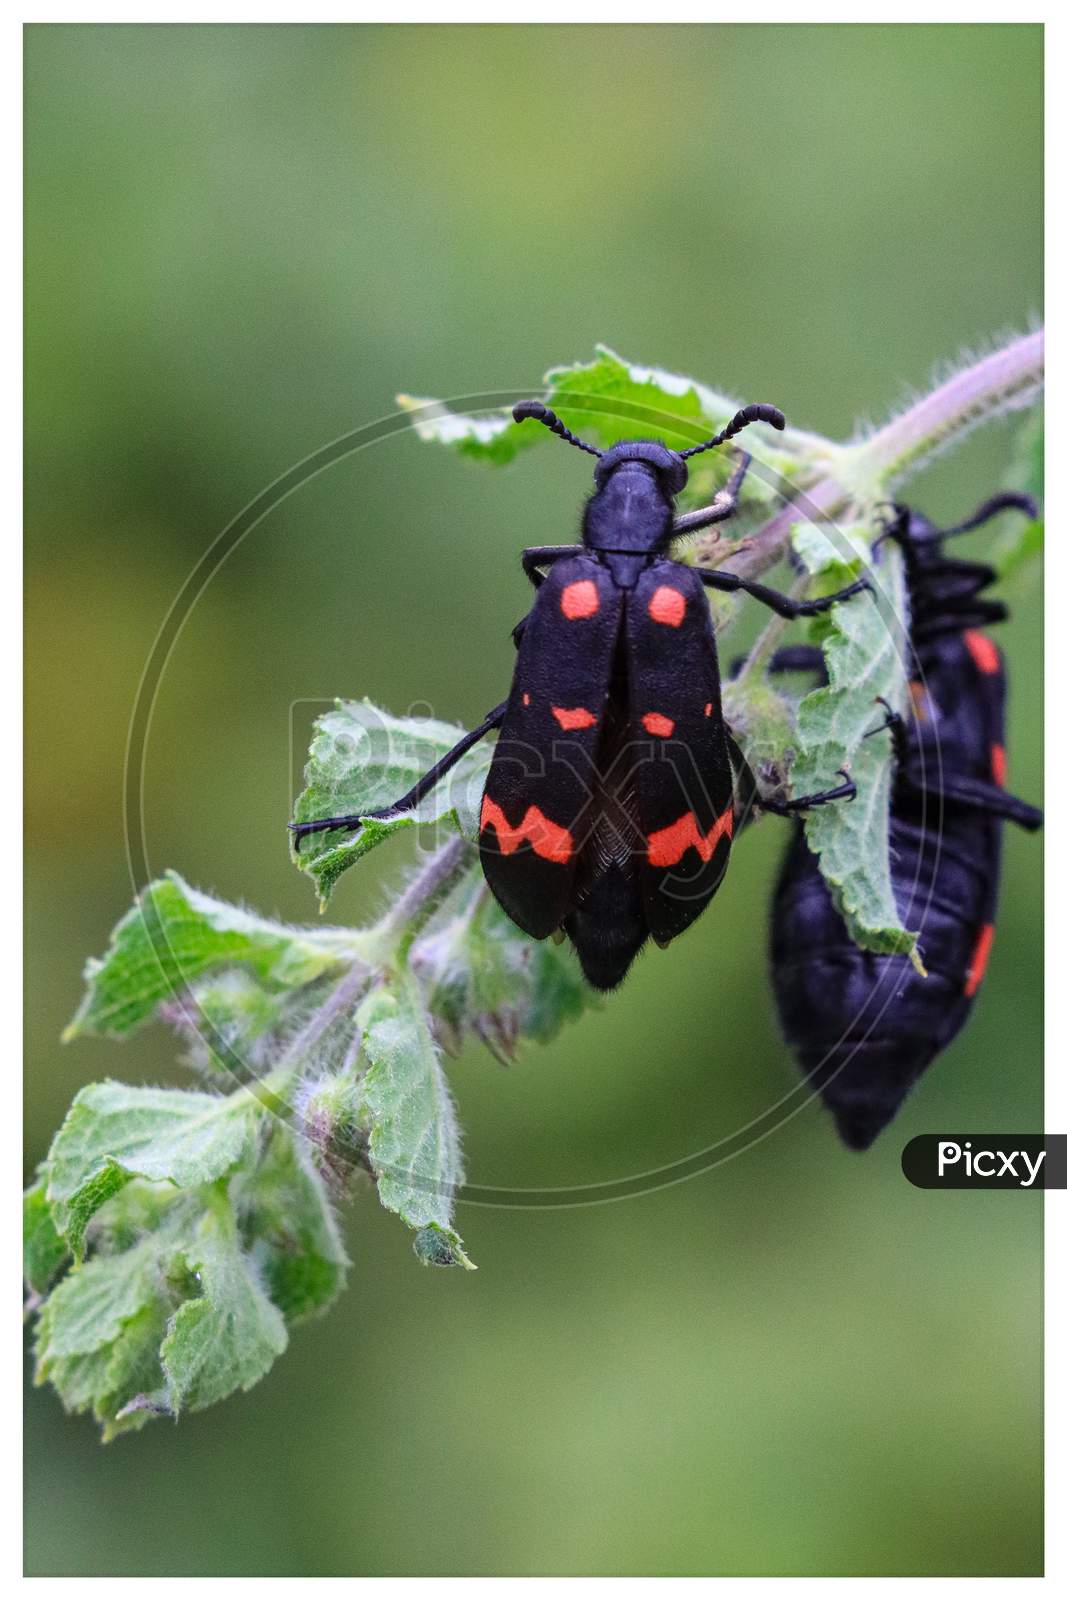 Hycleus beetle